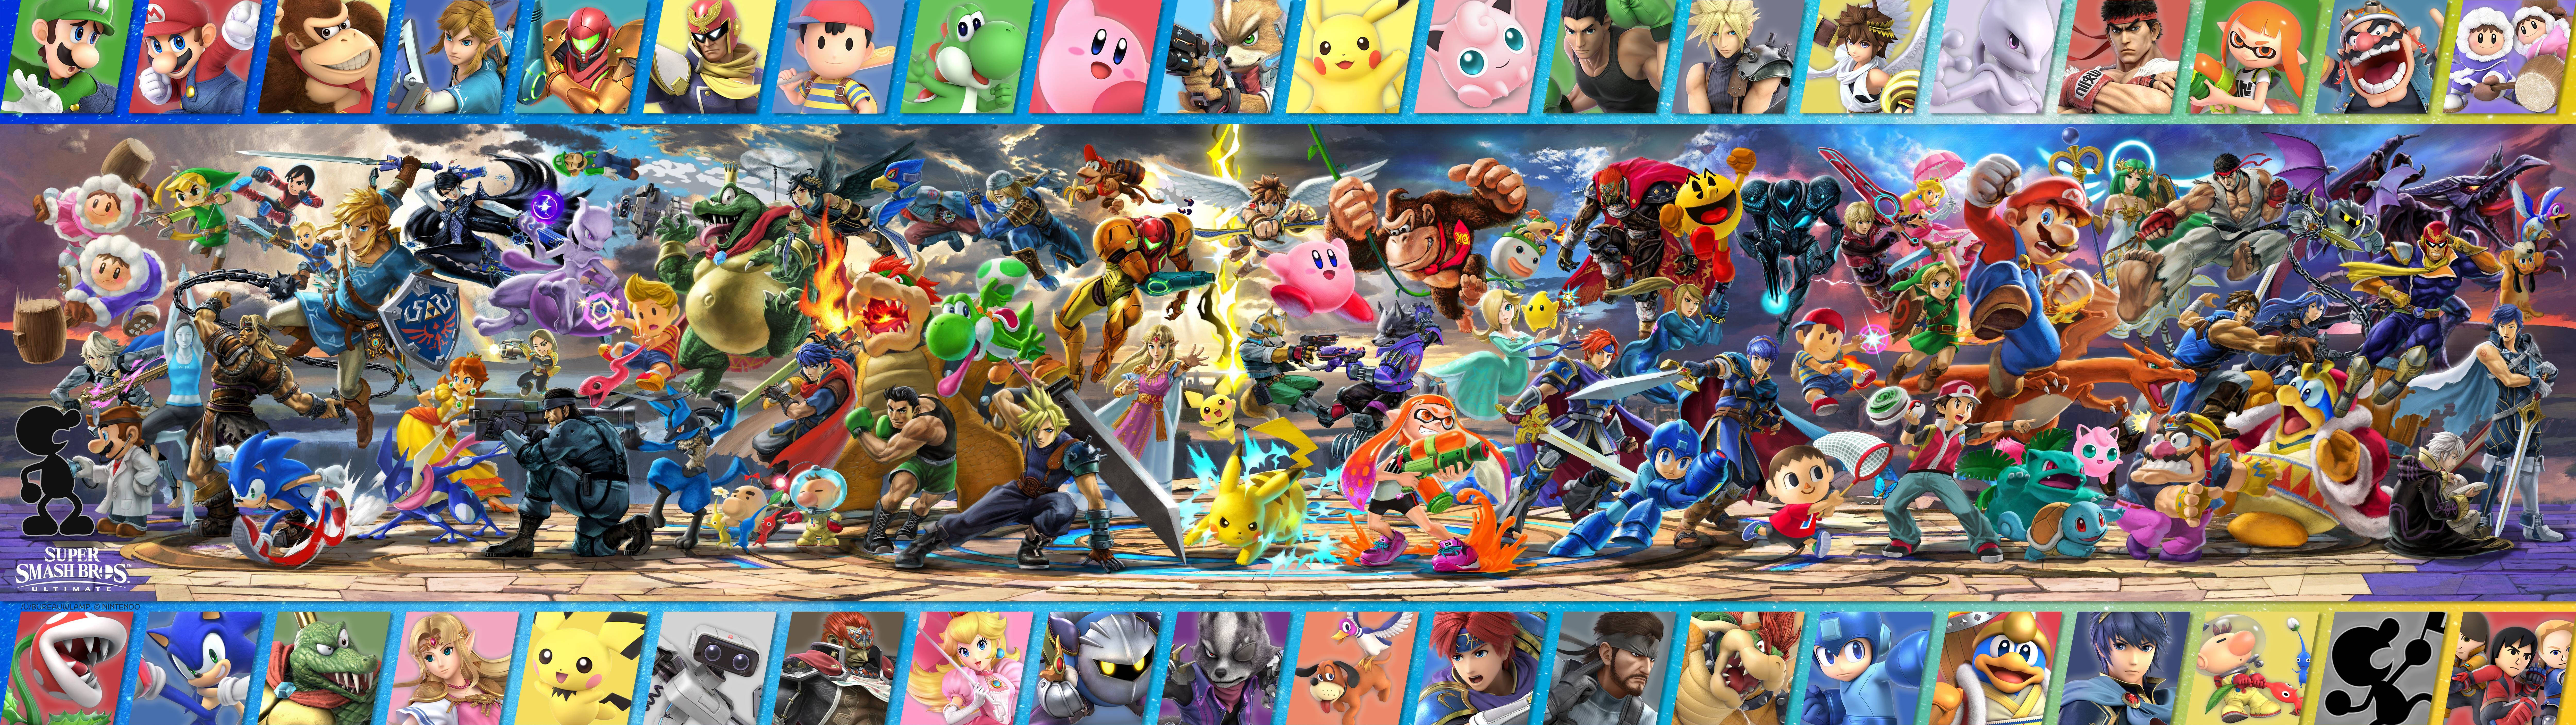 Dual Monitor Super Smash Bros Wallpaper